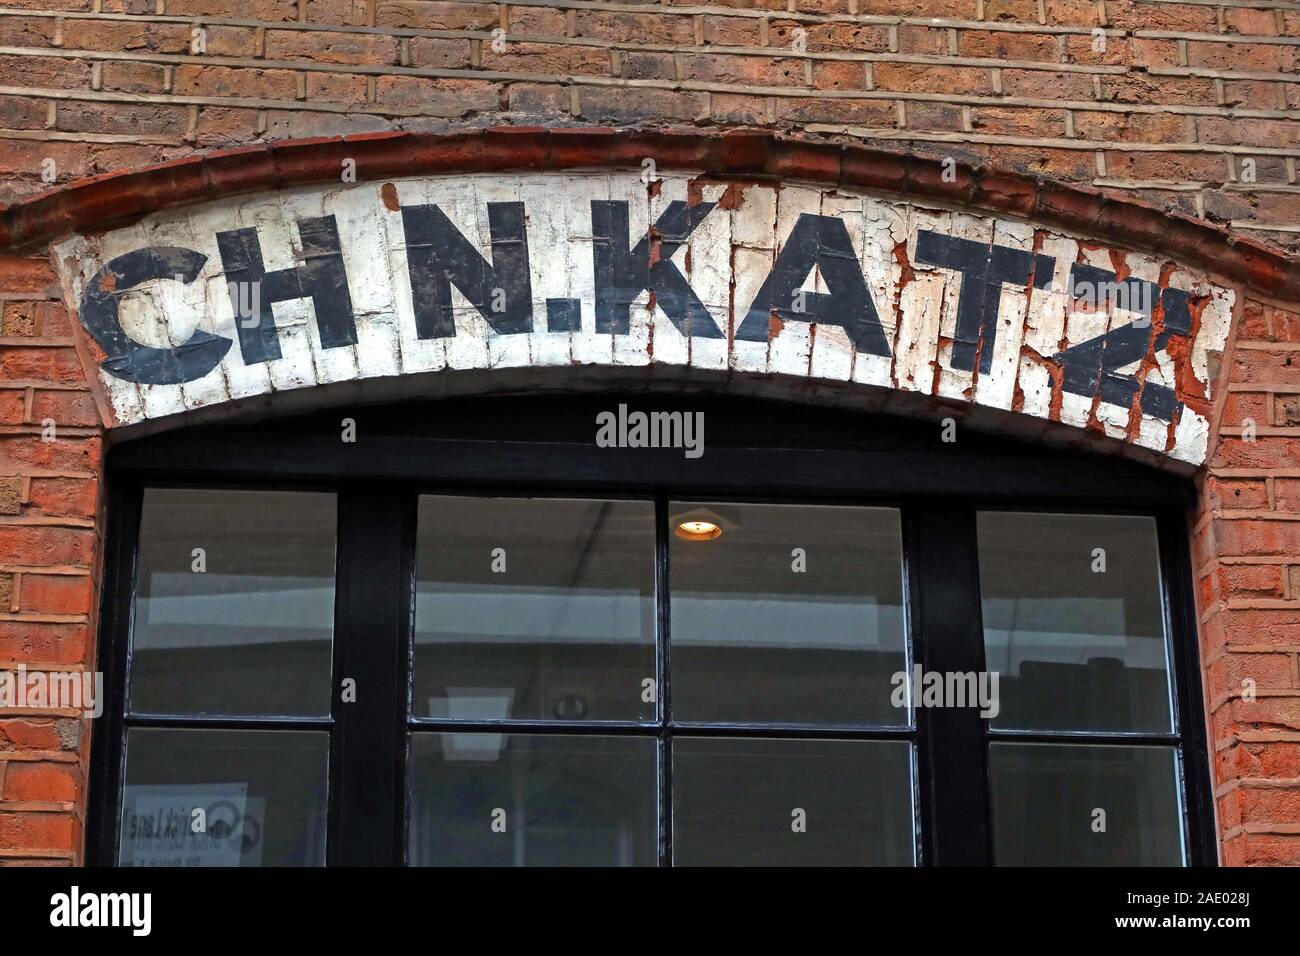 CH N.KATZ,across top of window,92 Brick Lane,Shoreditch,East End,London,England,UK, E1,Twine and String merchant Stock Photo